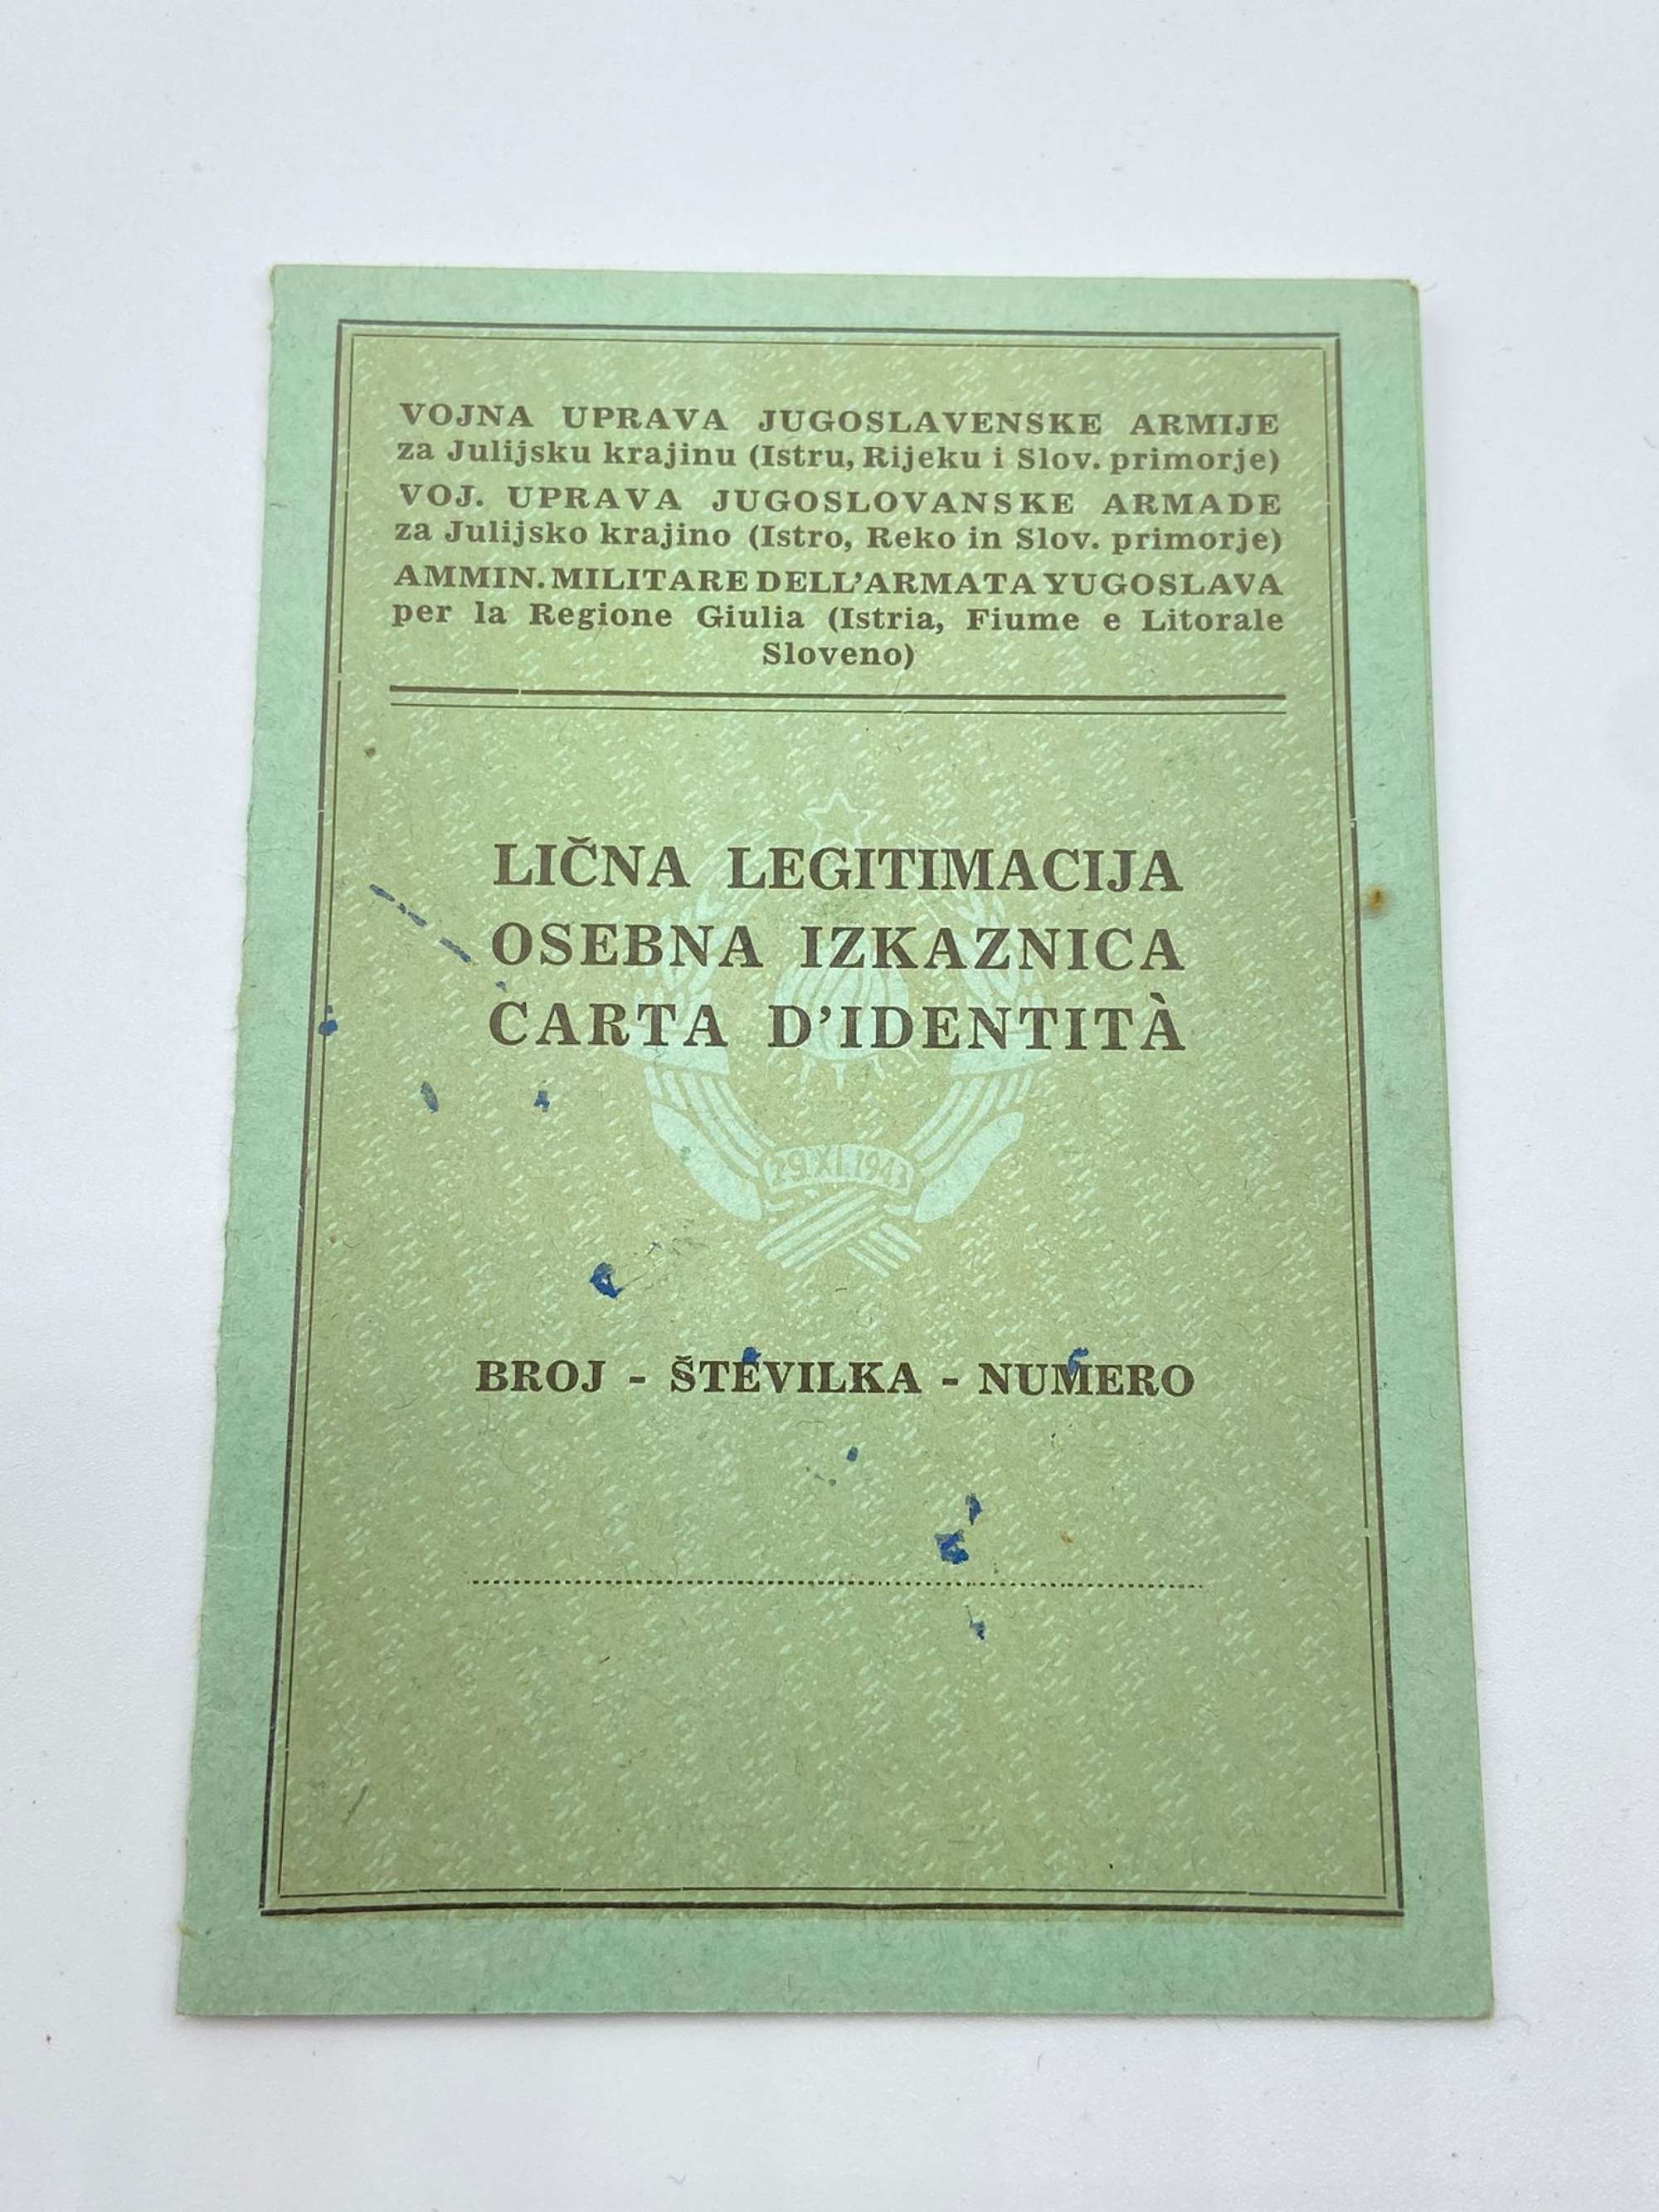 WW2 Yugoslavian Army Personal Identification Pass Dated 1943